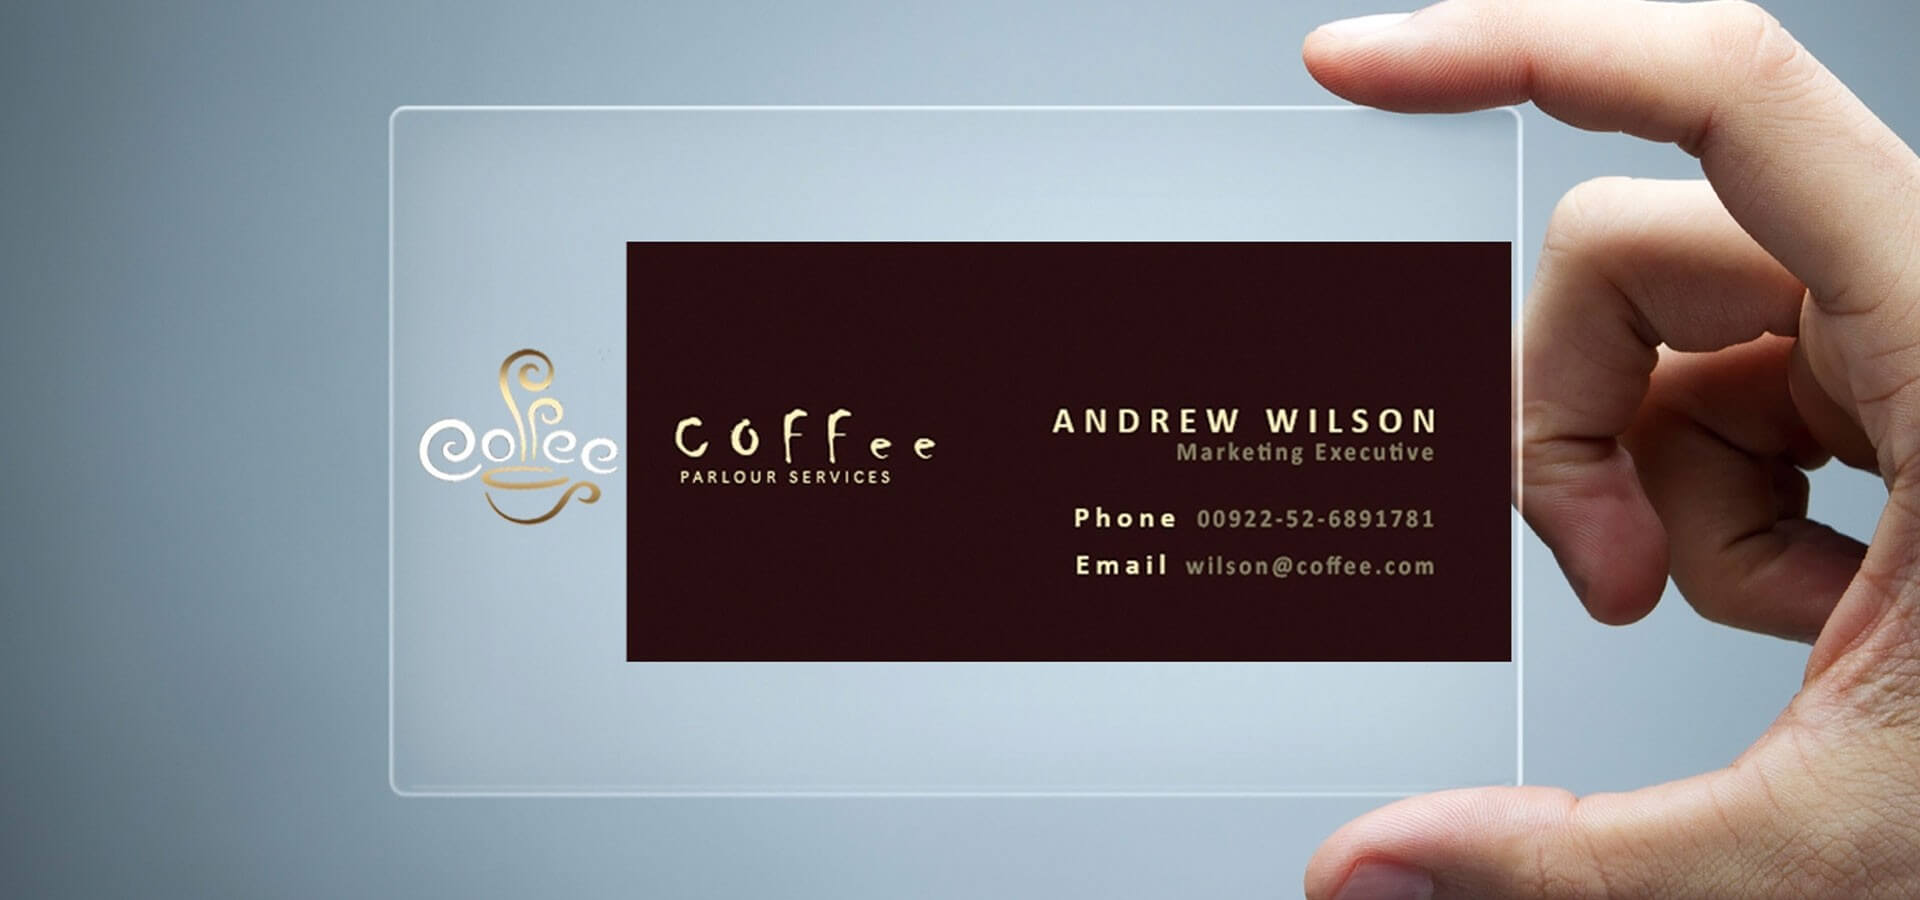 021 Trancprnt Business Card Template Ideas Construction For Coffee Business Card Template Free